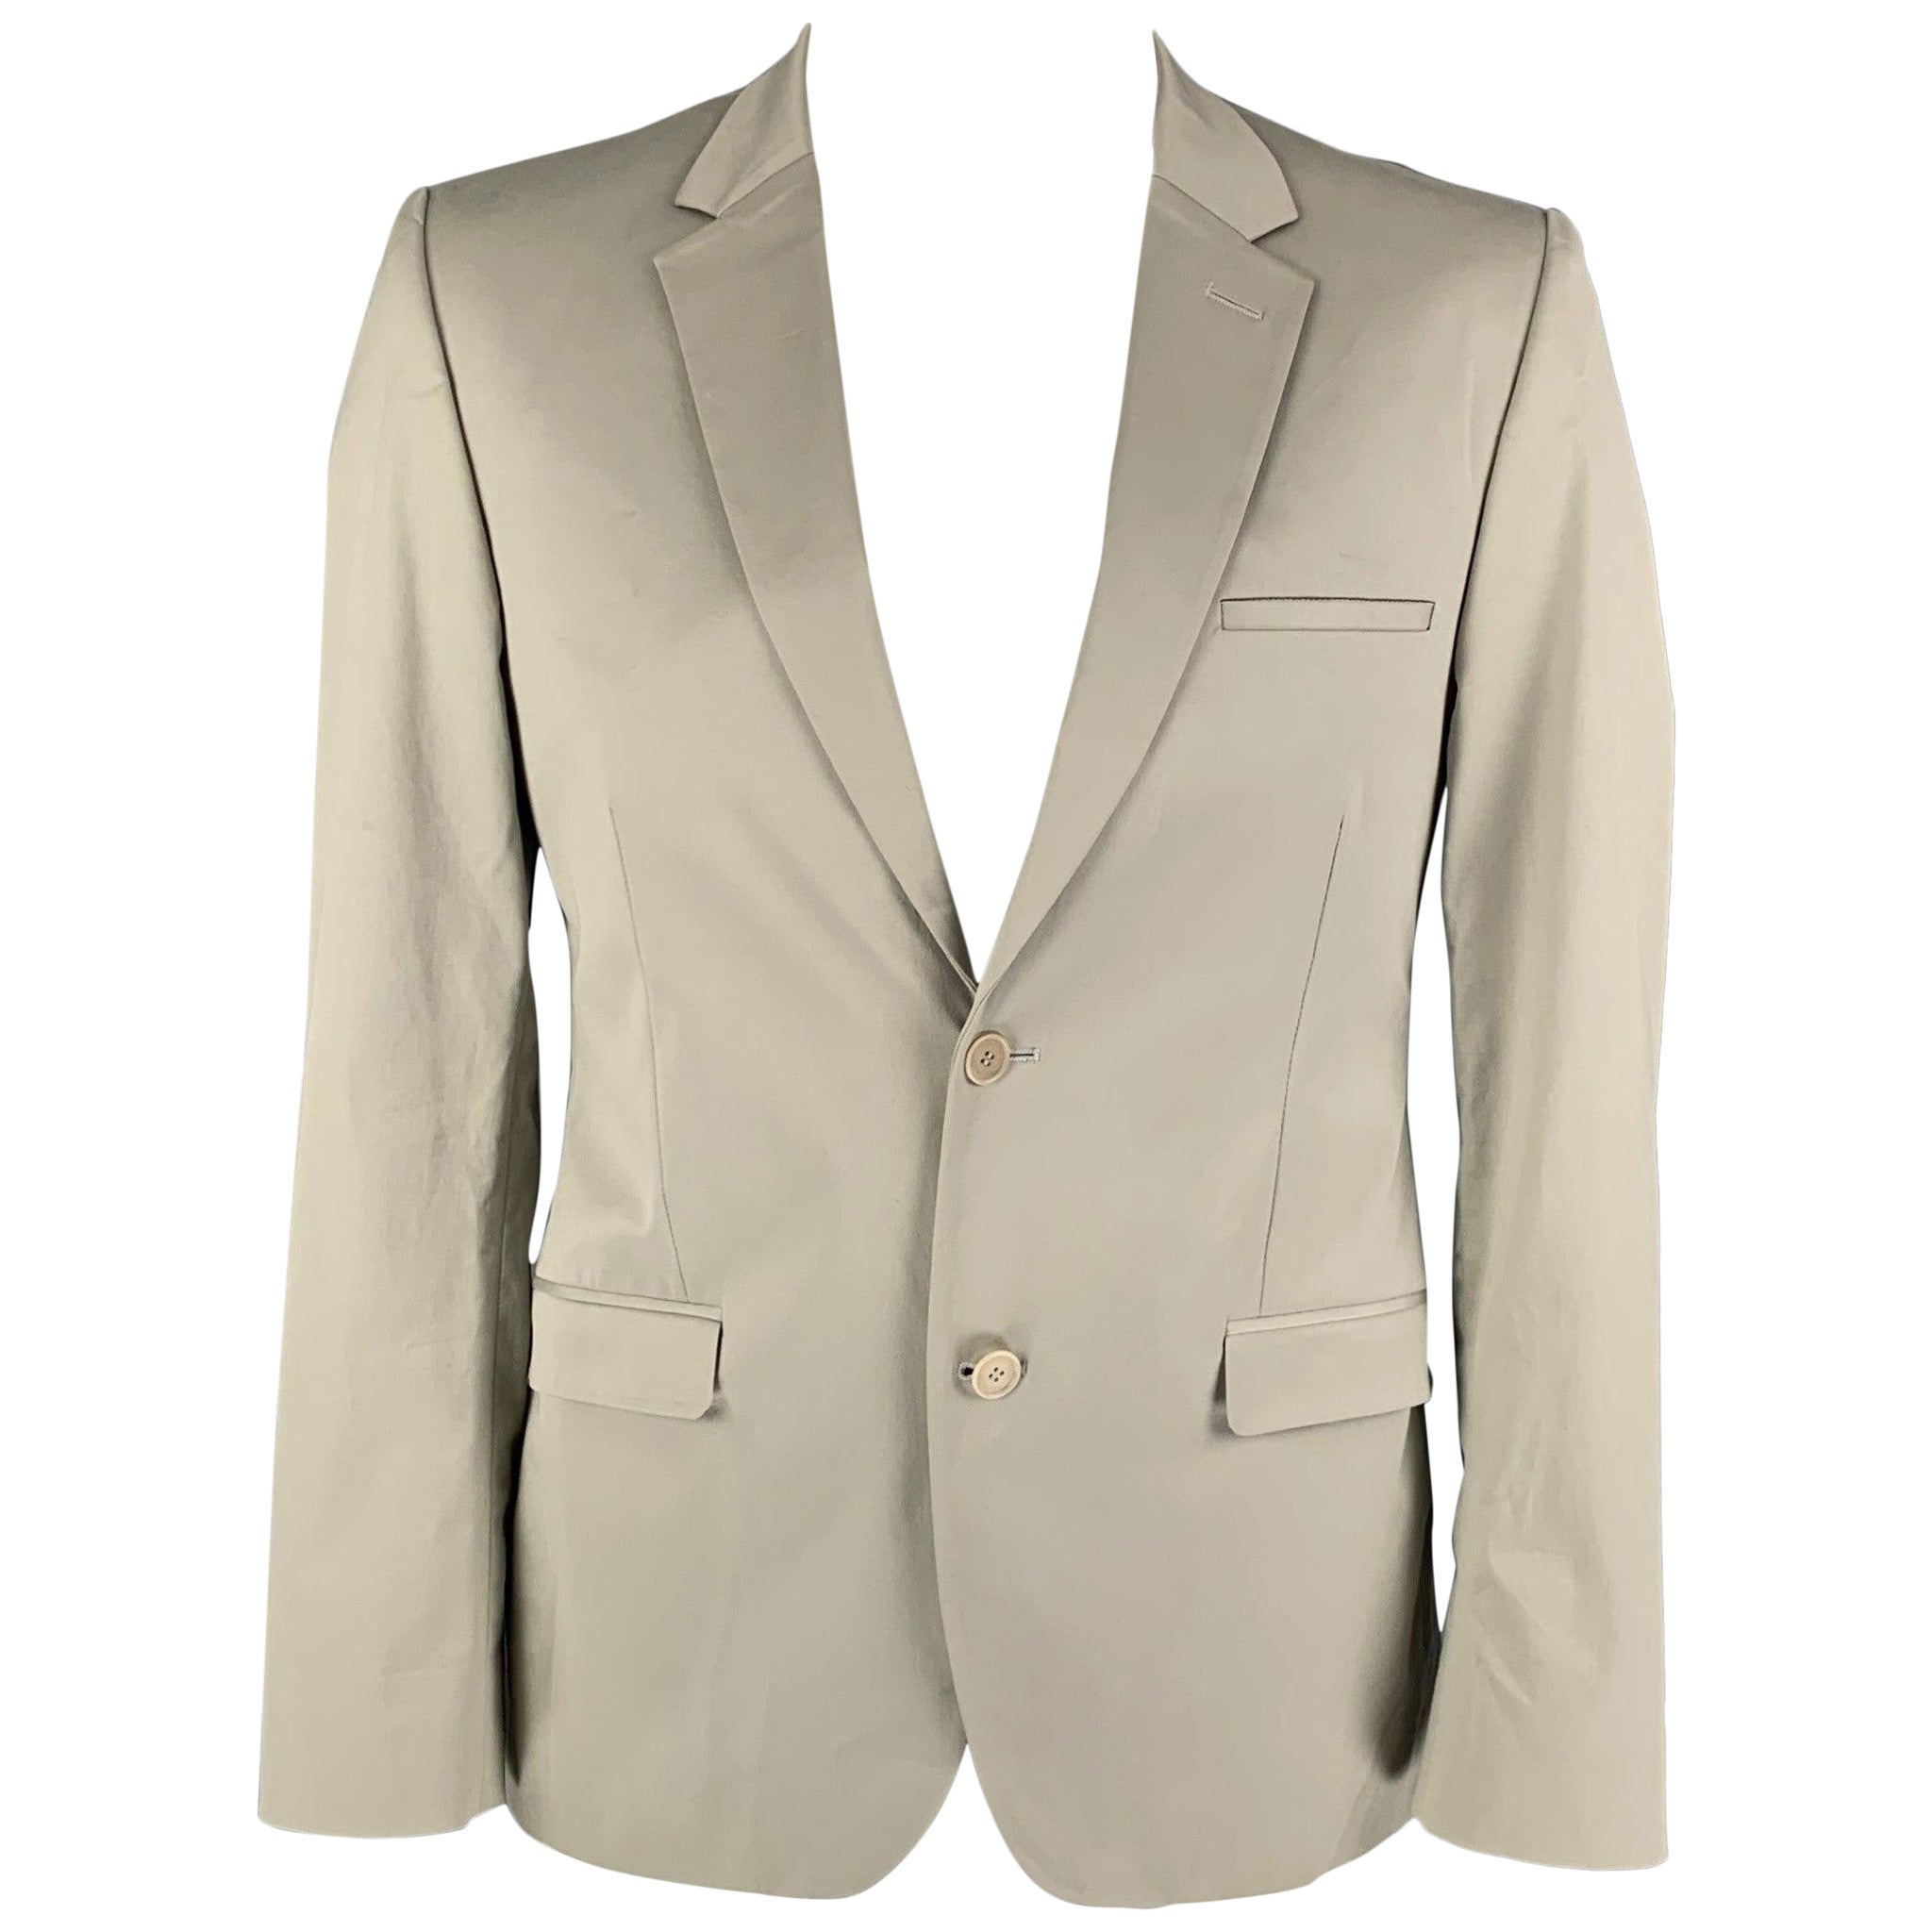 CALVIN KLEIN COLLECTION Size 40 Khaki Cotton Sport Coat For Sale